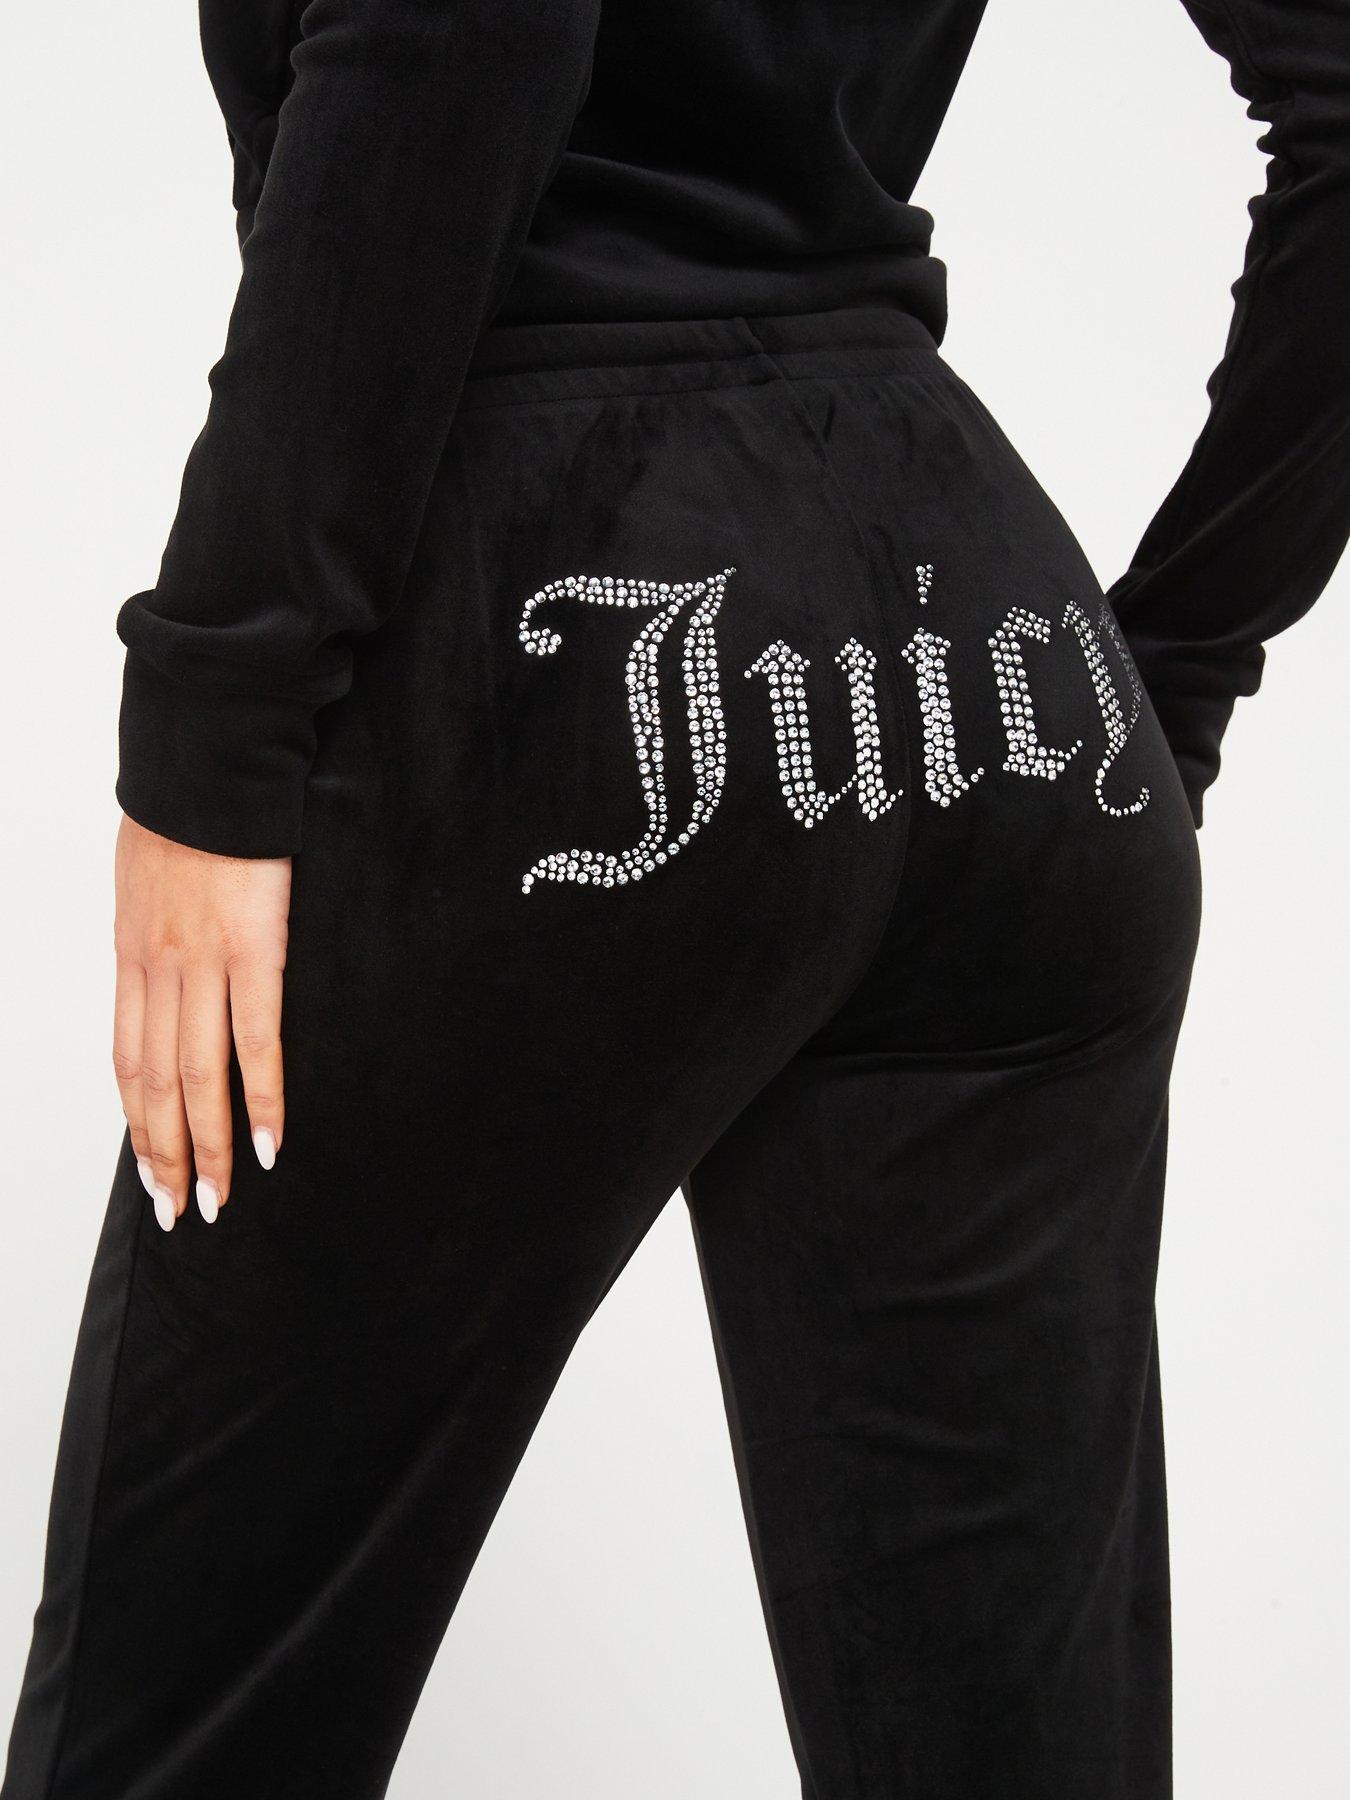 Juicy couture, Trousers & leggings, Women